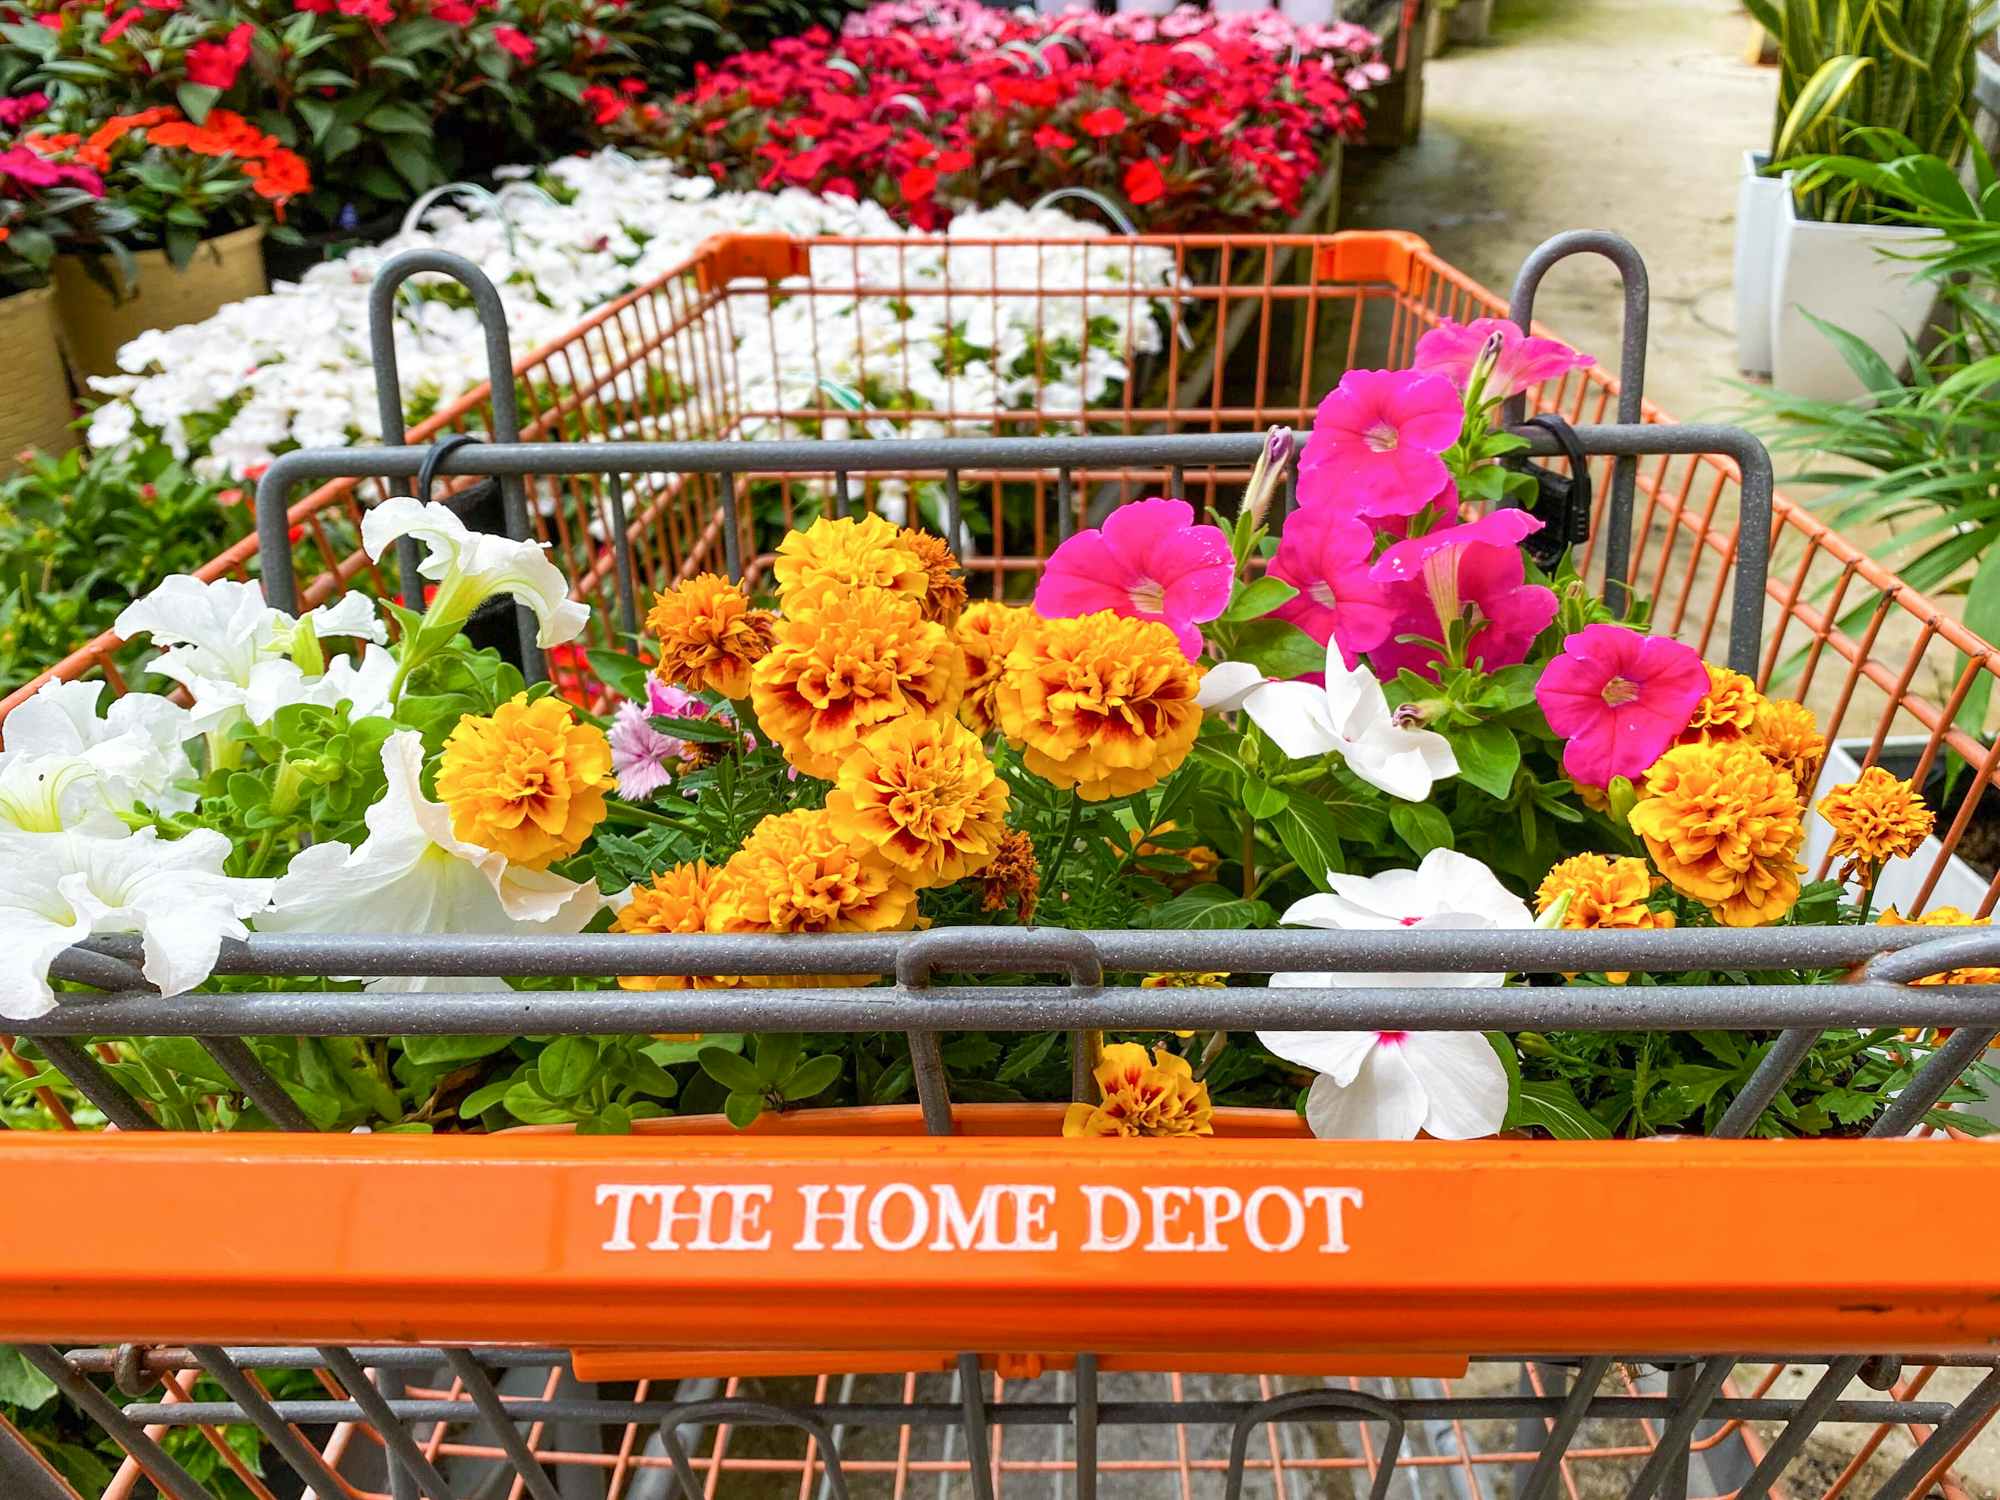 home depot shopping cart with flowers in garden center